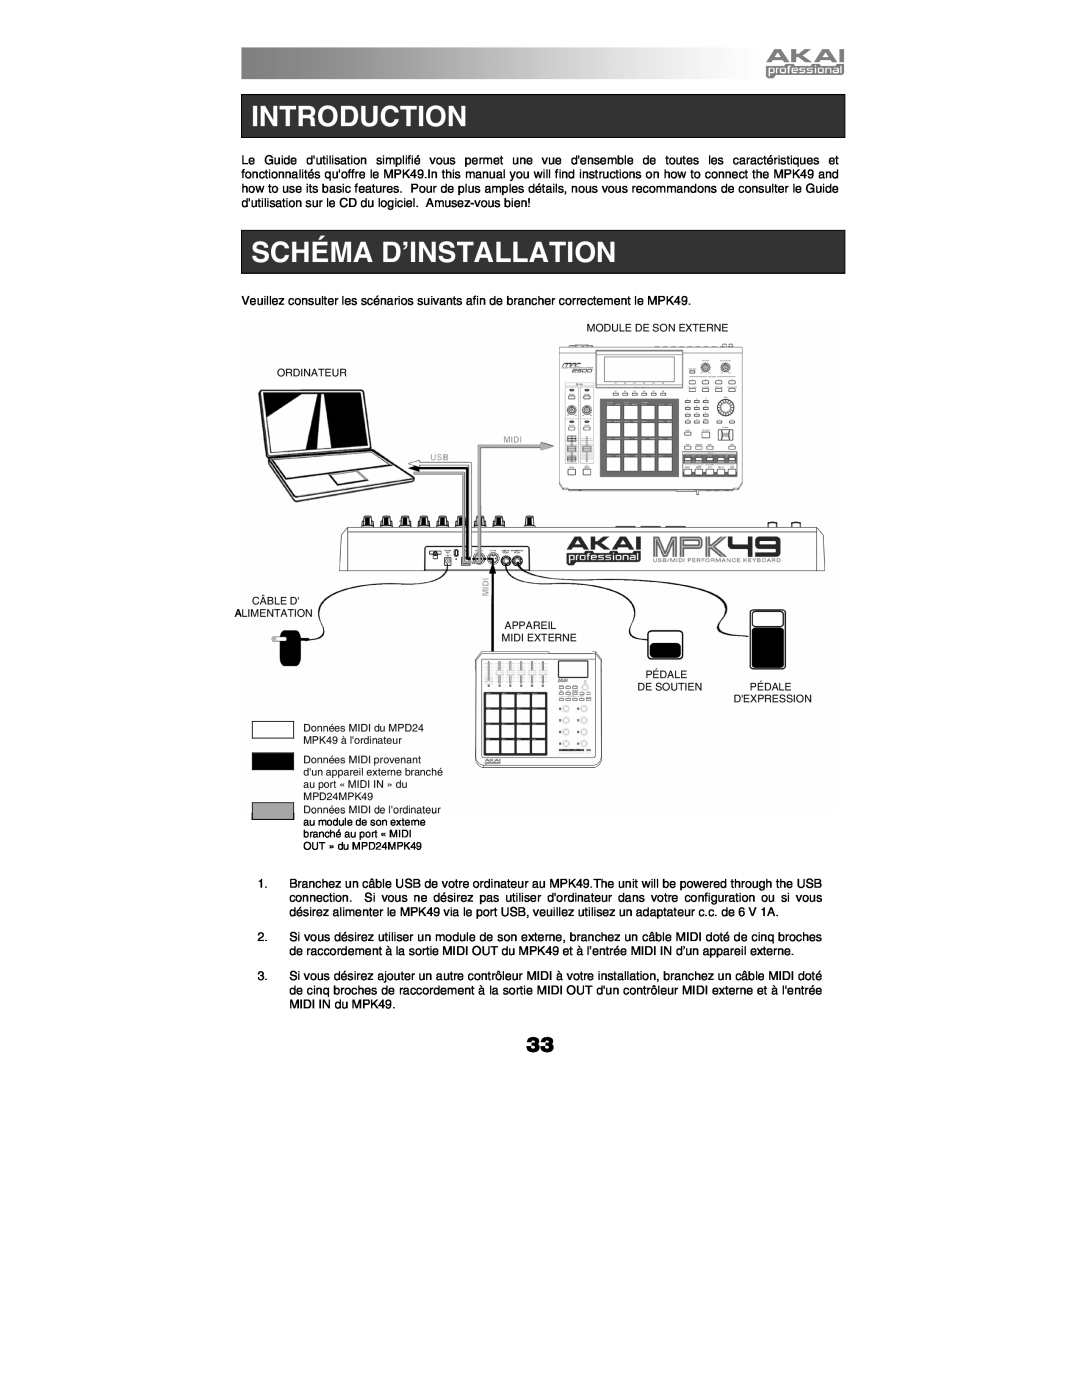 Akai MPK49 Introduction, Schéma D’Installation, Module De Son Externe Ordinateur Câble D Alimentation Appareil 